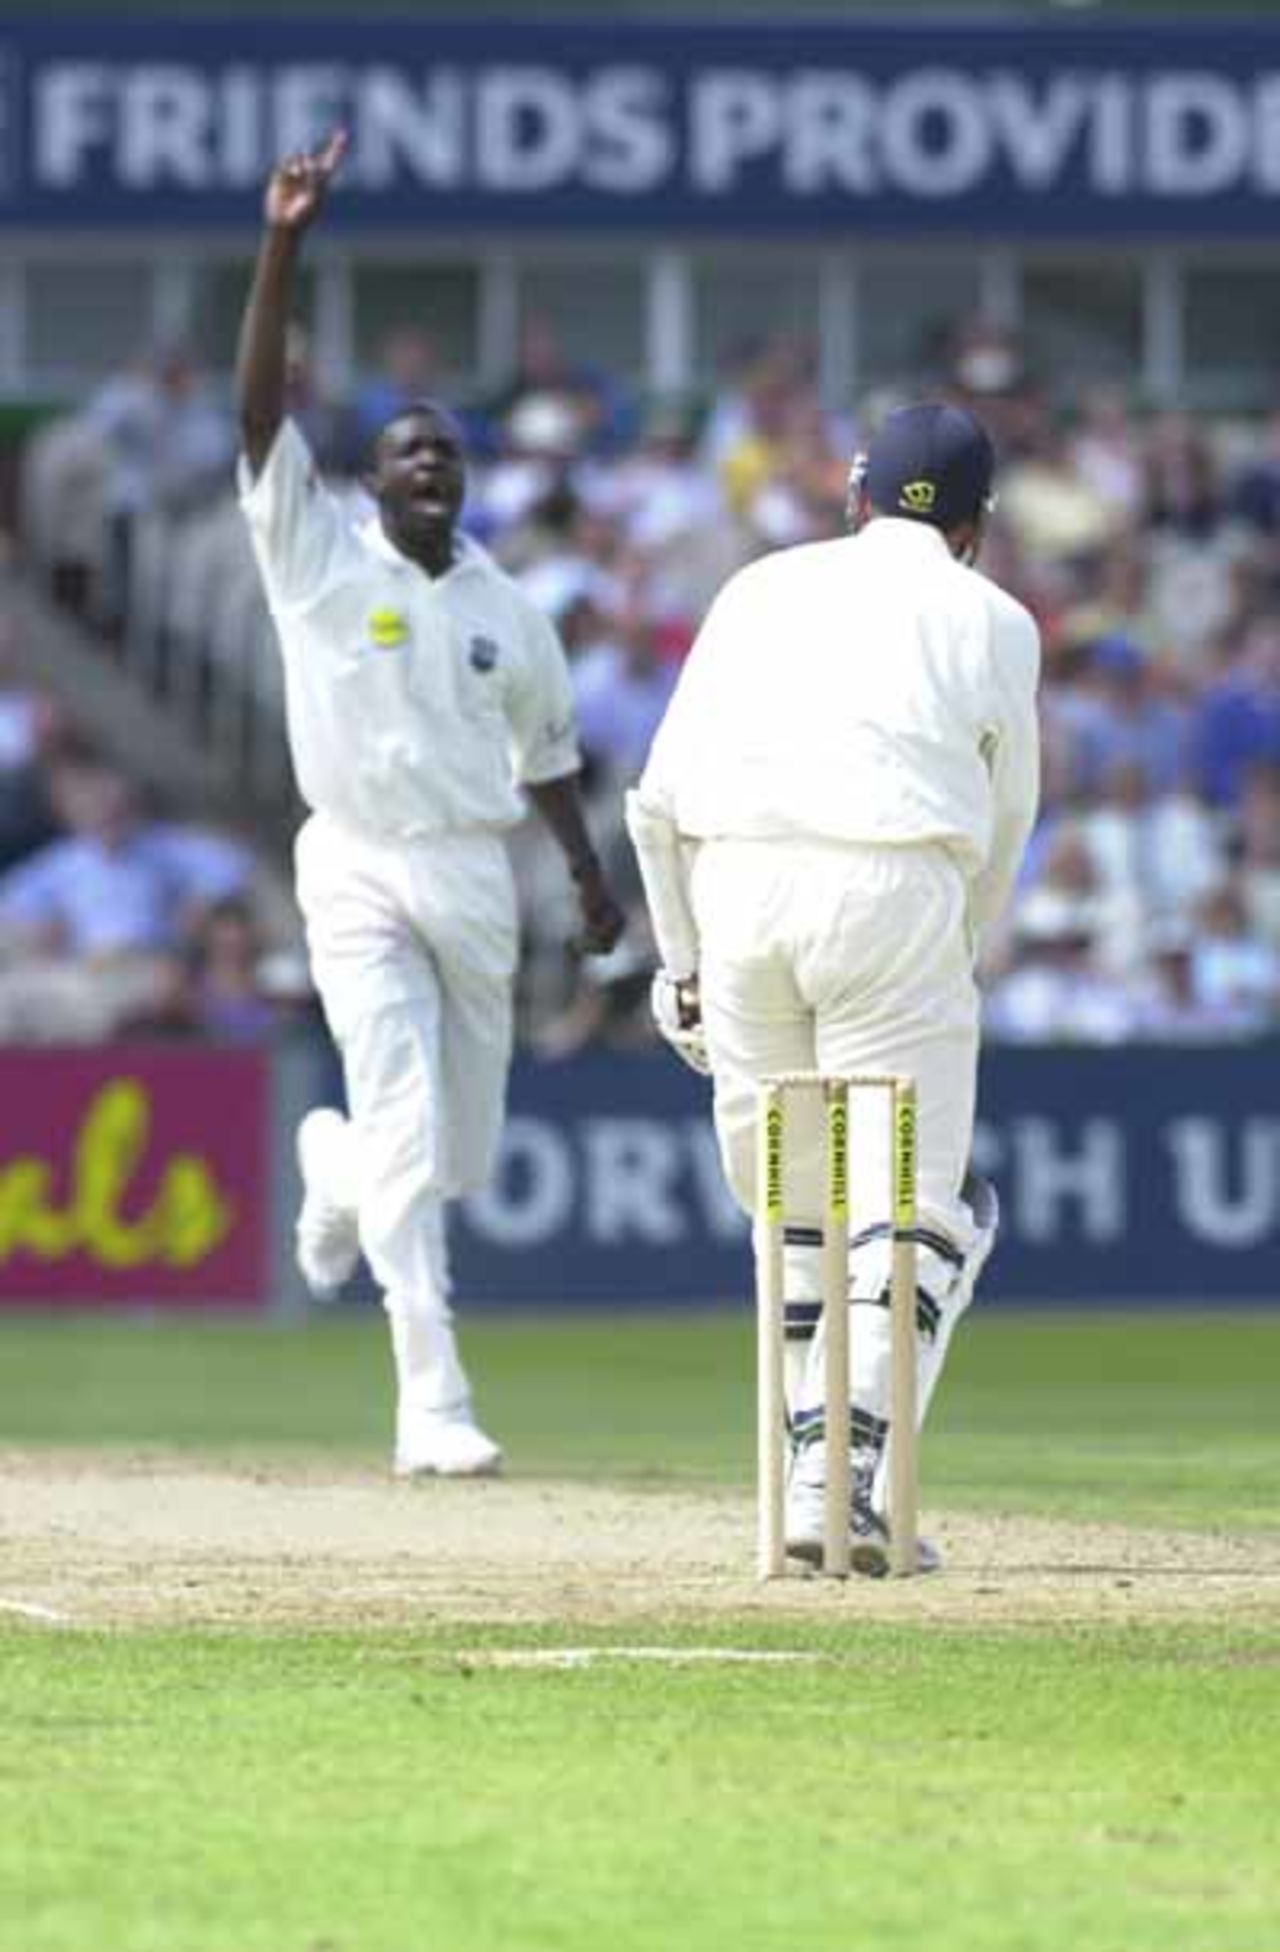 England v West Indies, Manchester 2000